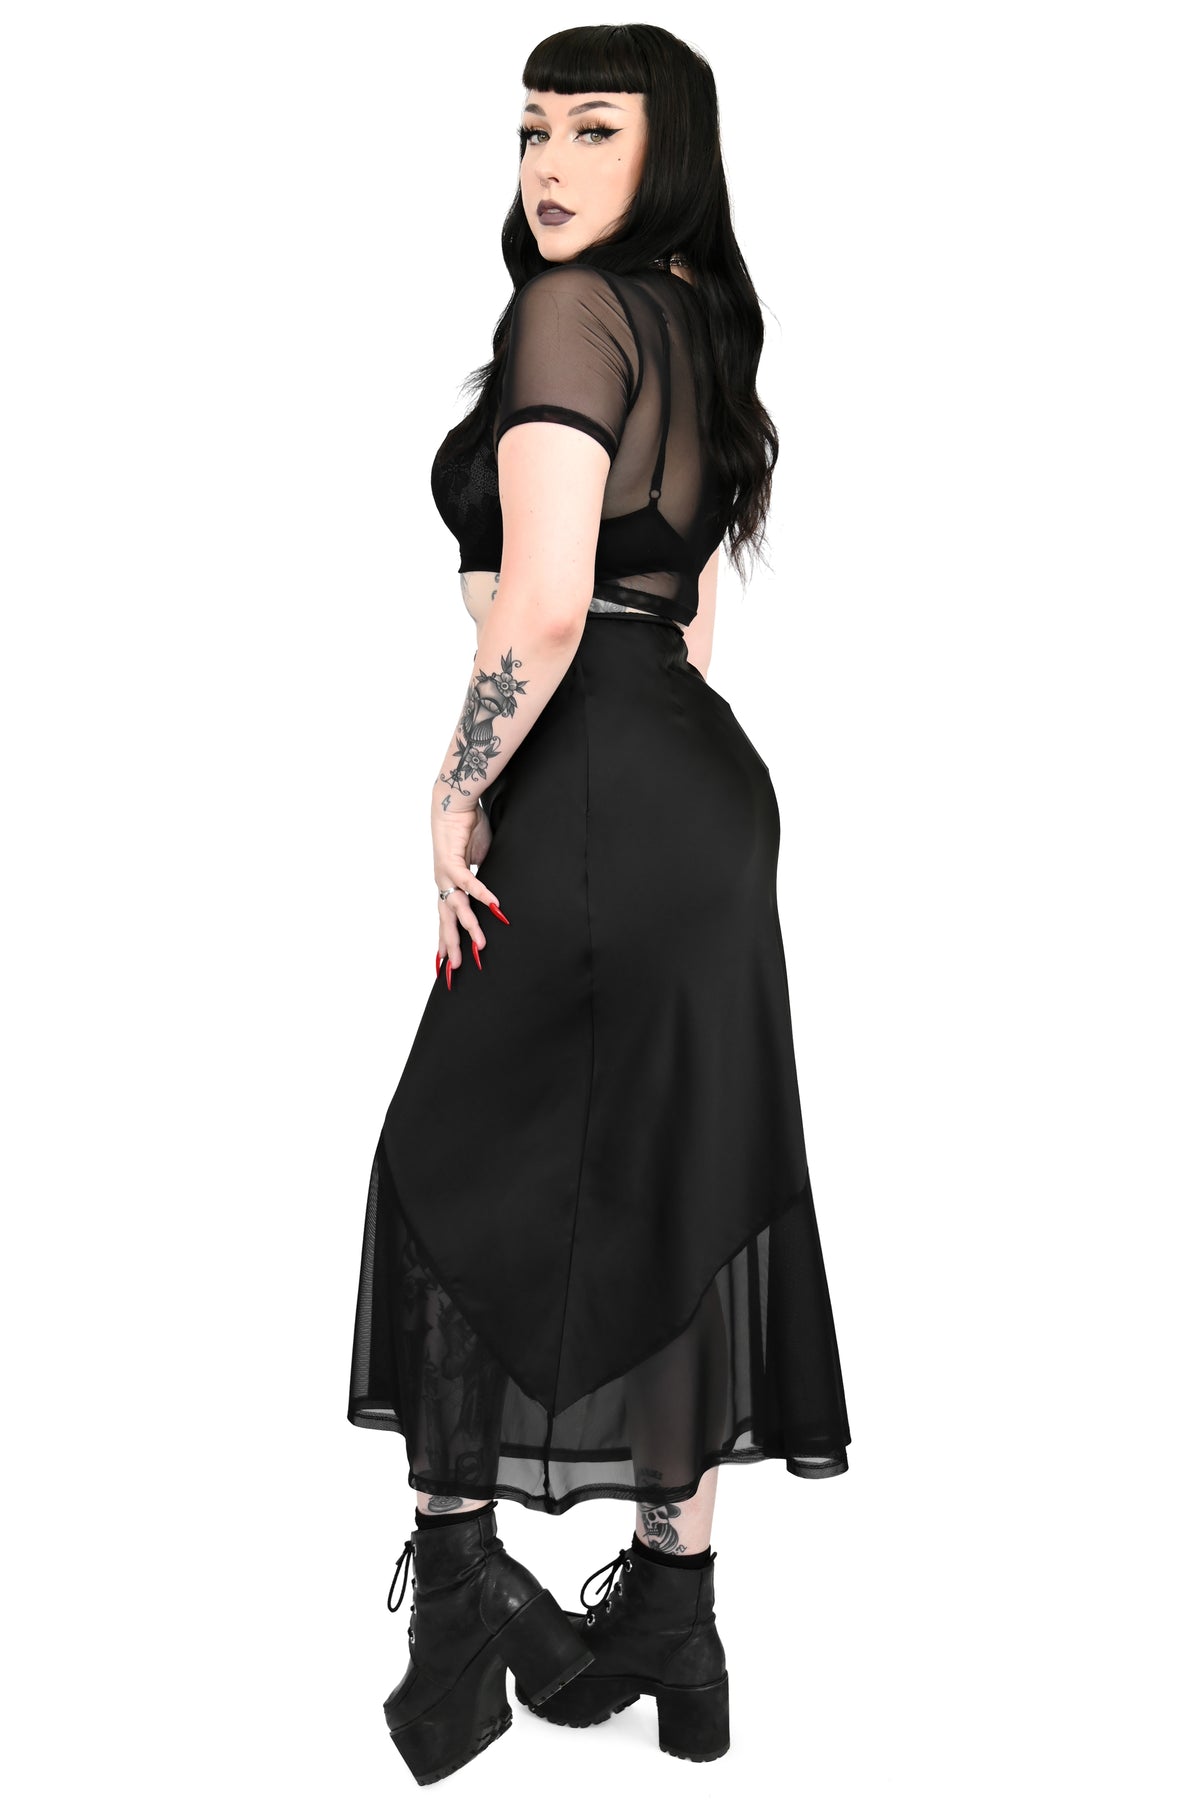 black satin maxi skirt with waist tie and mesh bottom panel